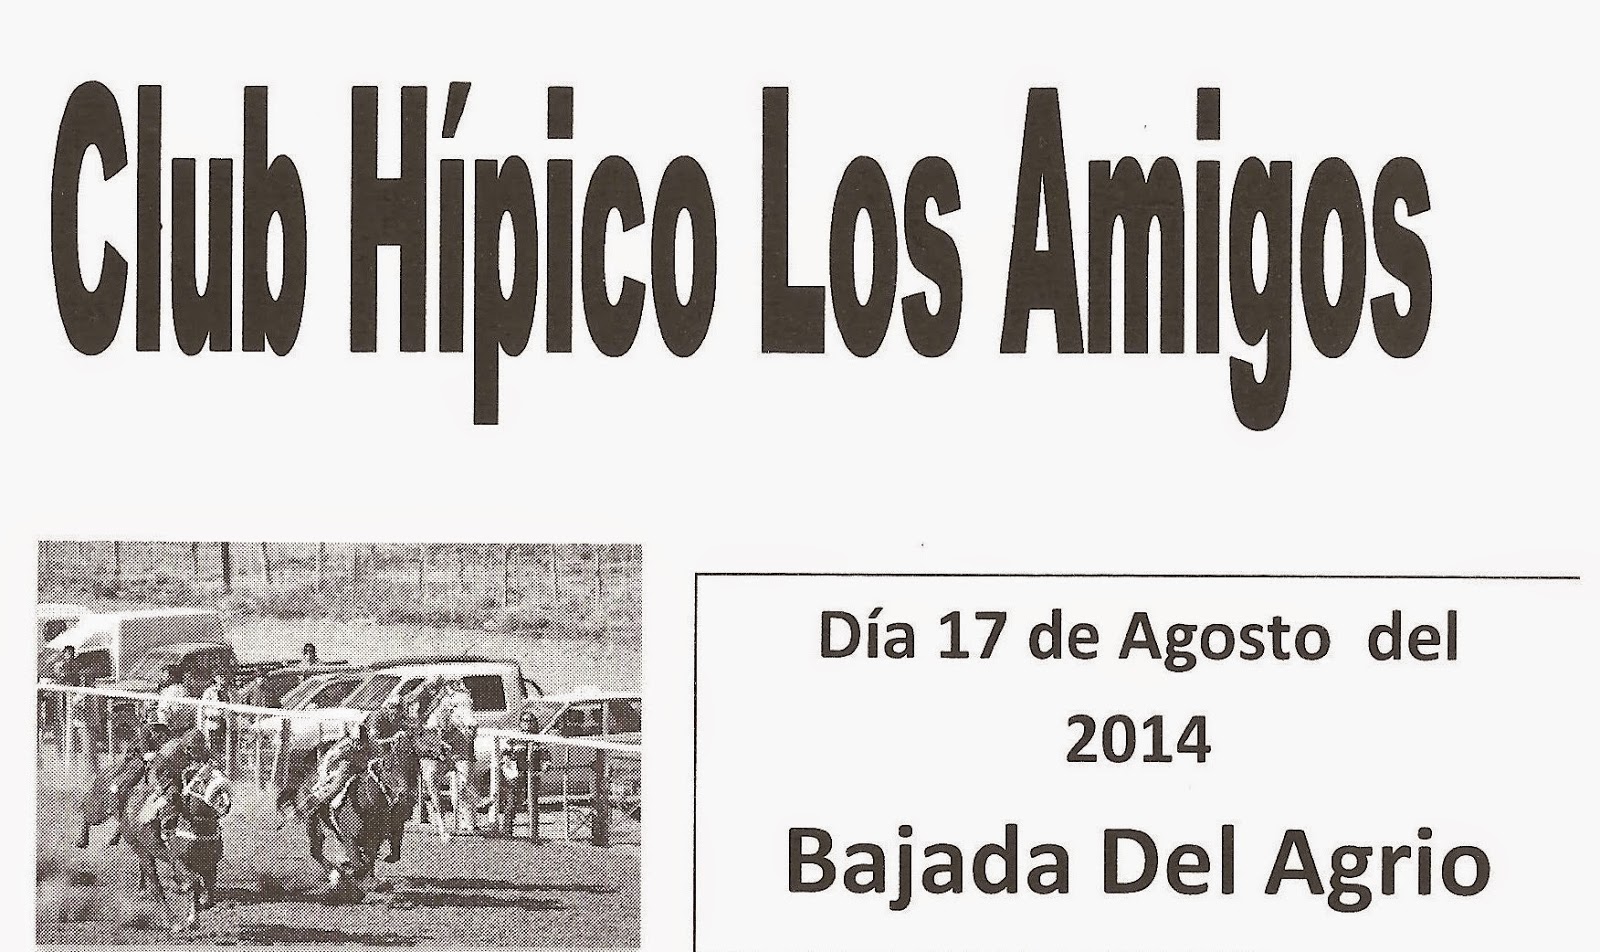 http://turfdelapatagonia.blogspot.com.ar/2014/08/1708-rograma-de-carreras-de-caballos-en.html